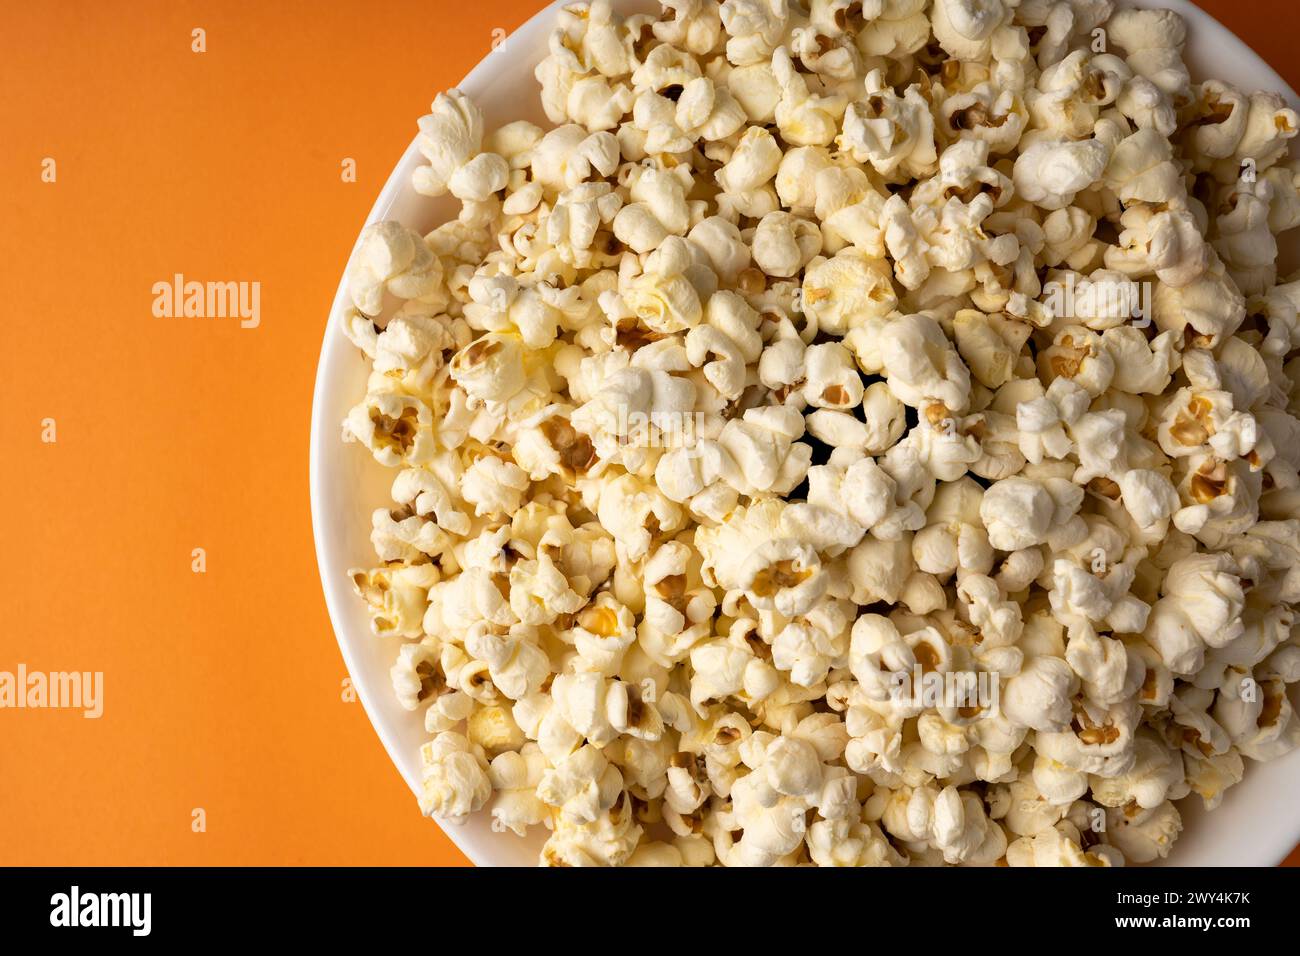 A white bowl of popcorn on an orange table. Stock Photo